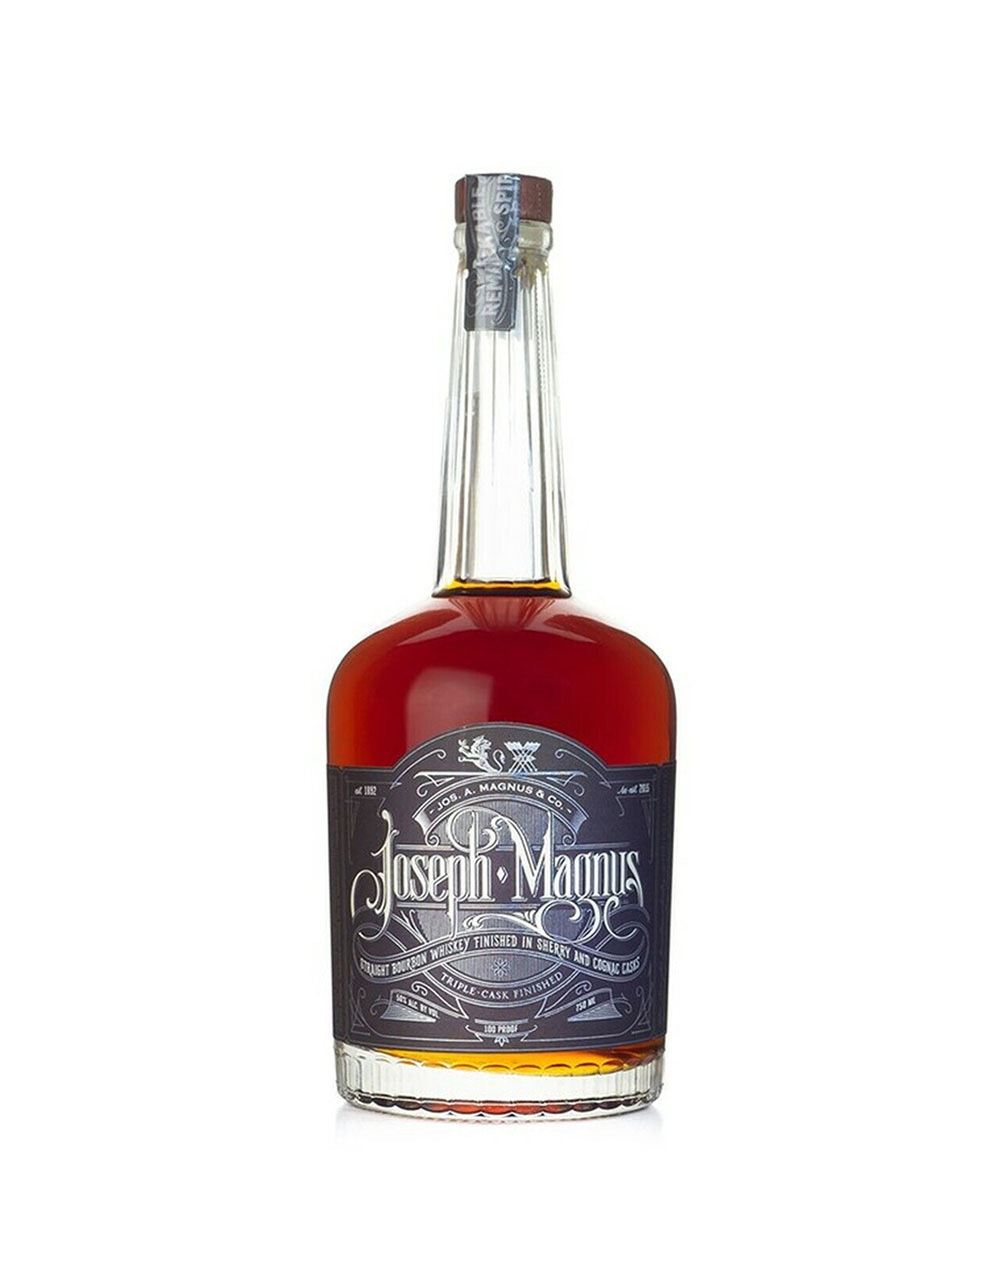 Jim Beam Distiller's Masterpiece Sherry Cask Finished Bourbon